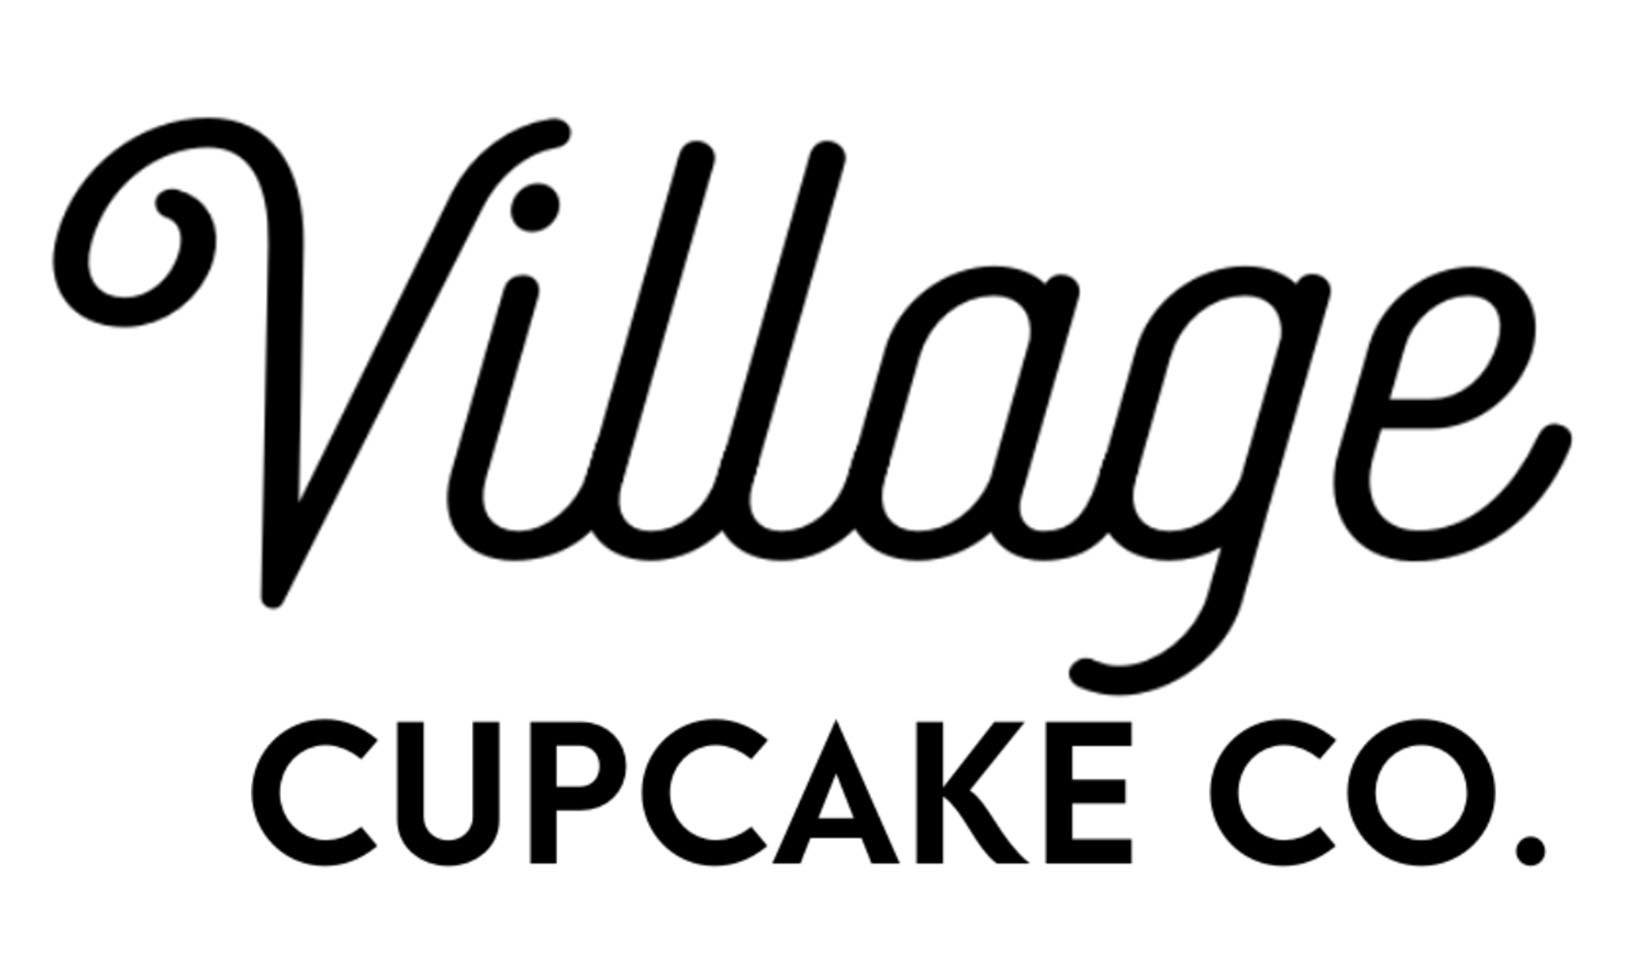 Village Cupcake Co.